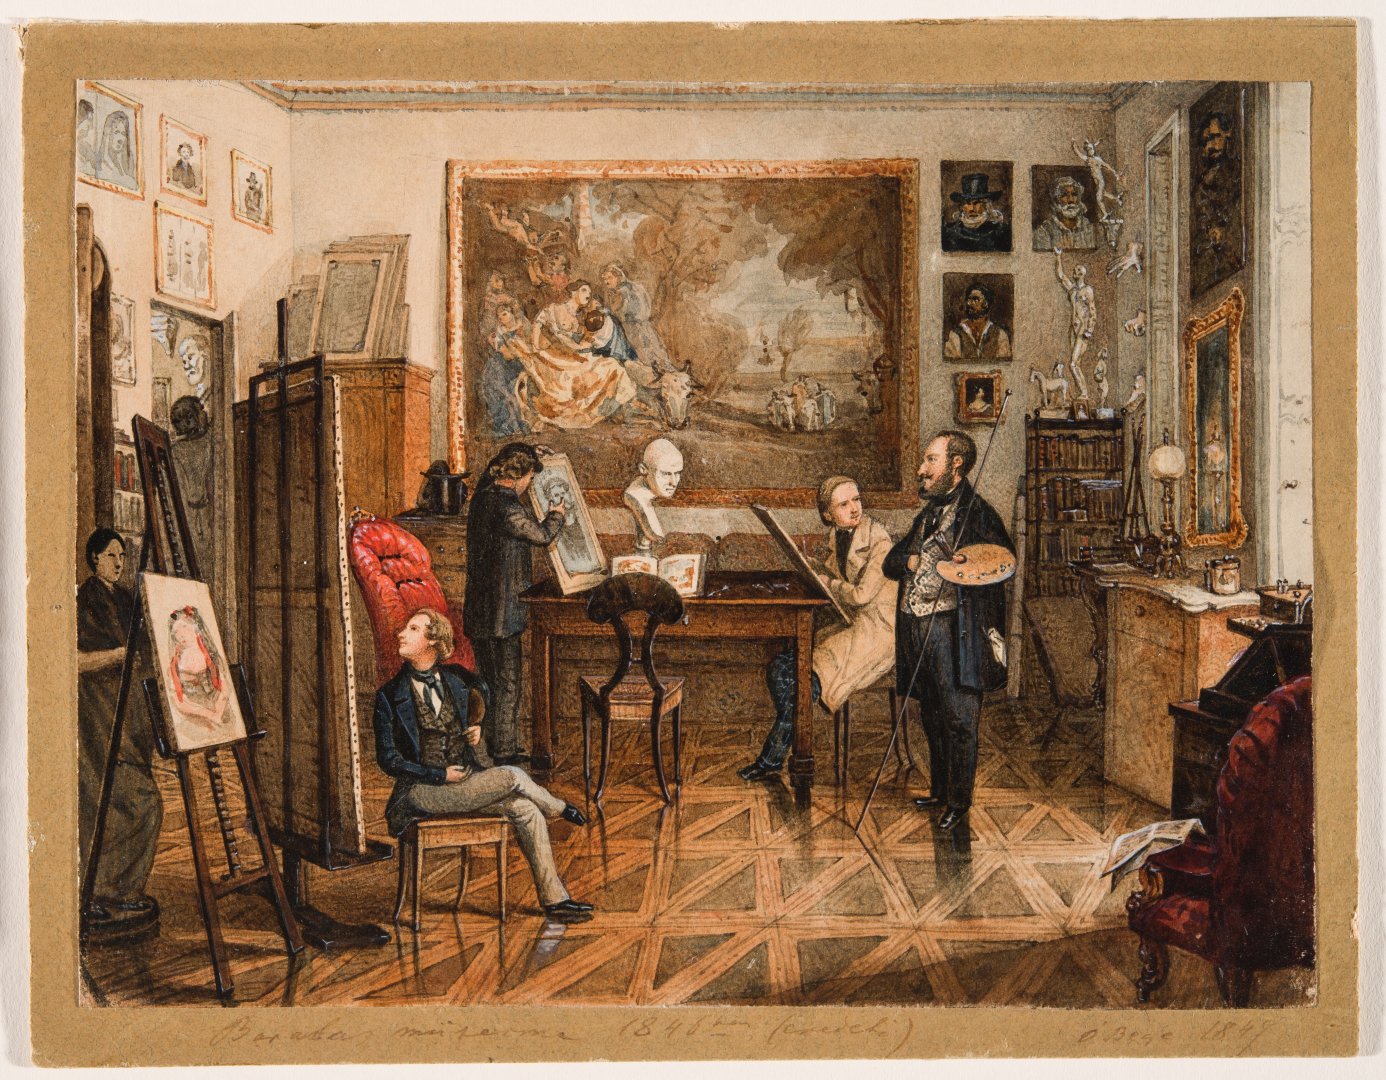 Than Mór: Barabás Miklós műterme 1846-ban, 1847